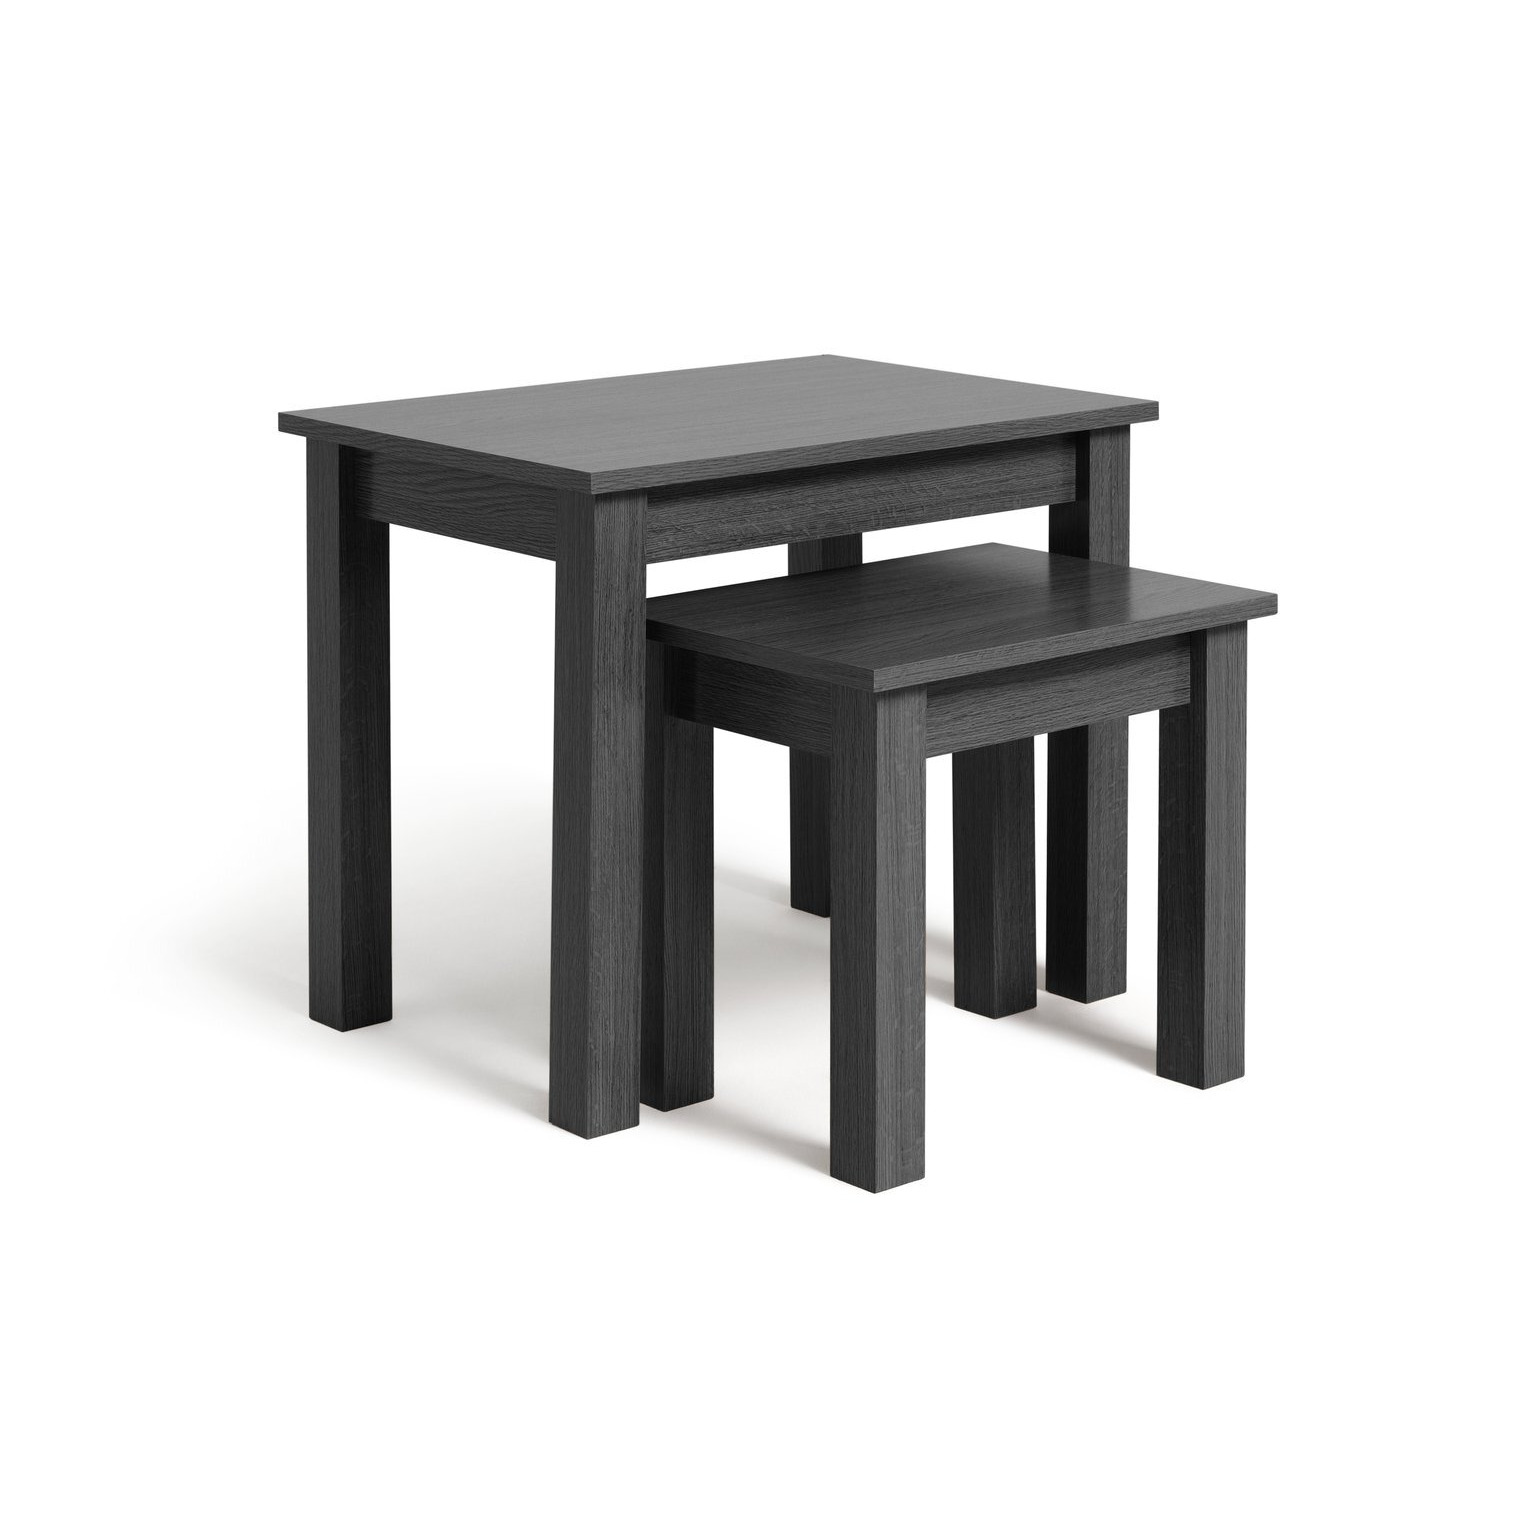 Argos Home Nest of 2 Tables - Black - image 1